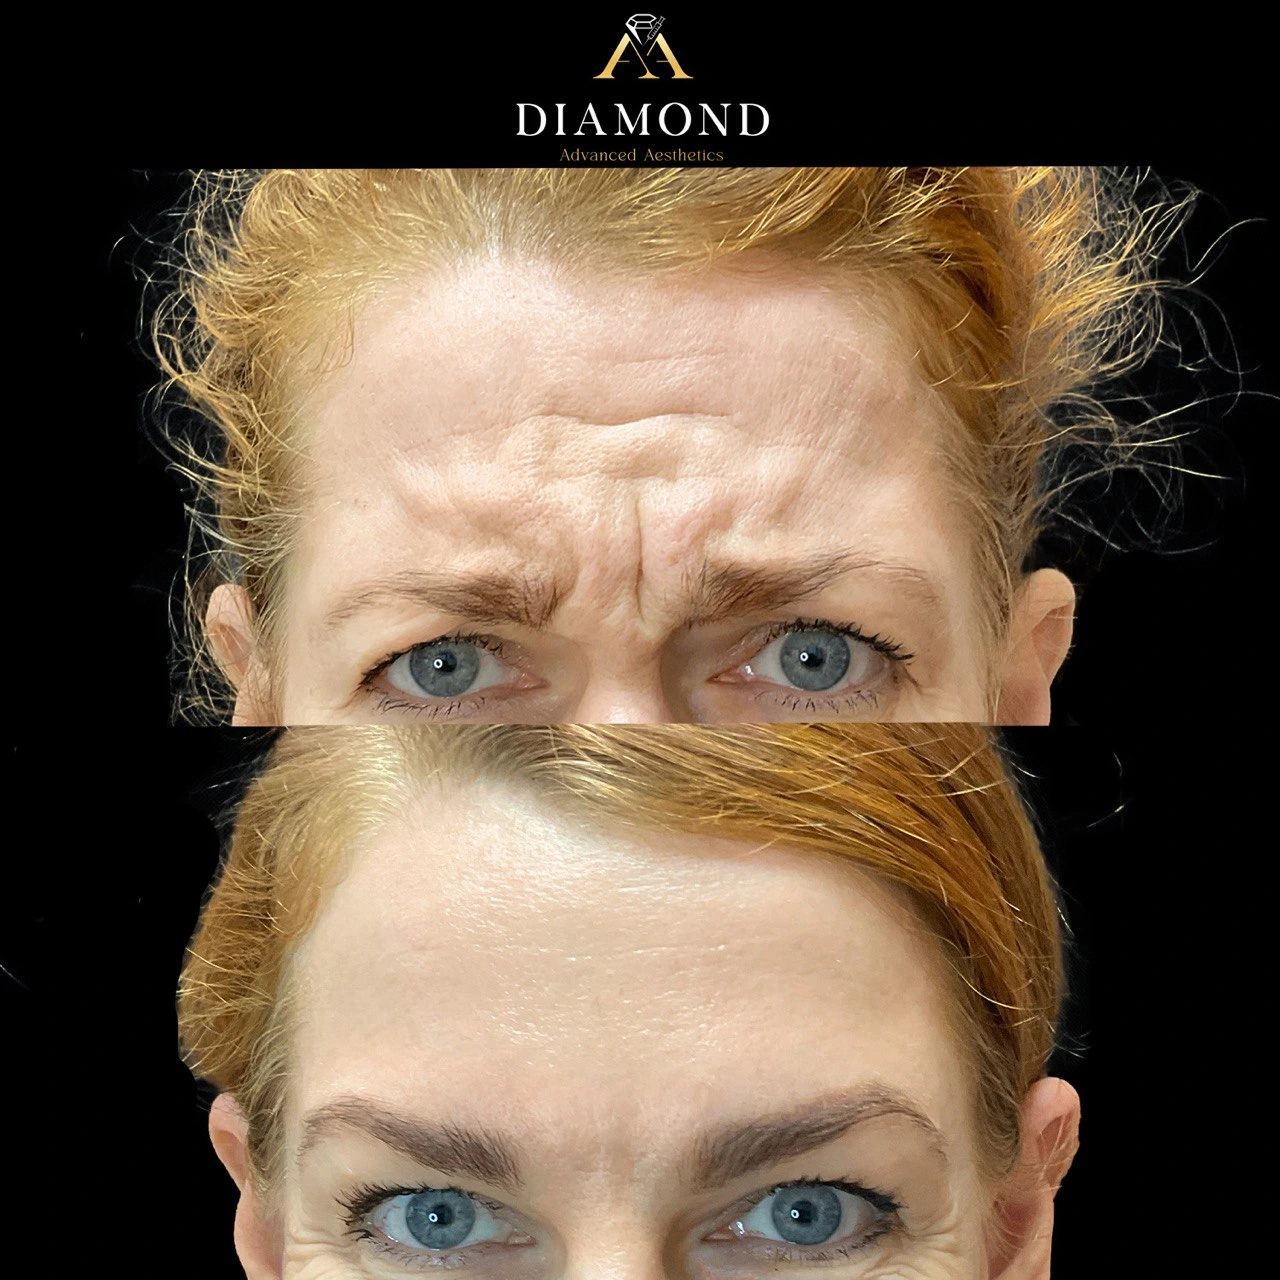 Forehead-After-before |diamond advanced aesthetics | New york|